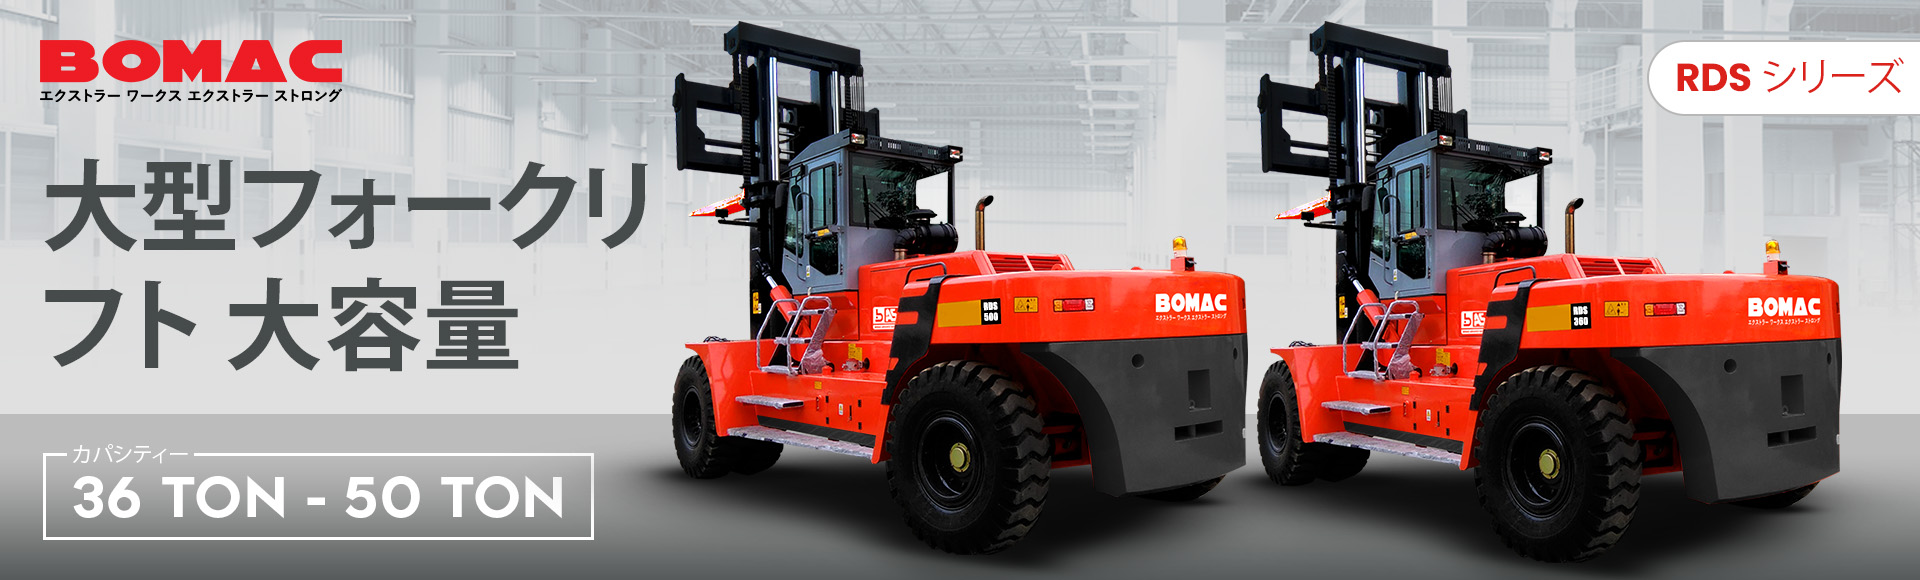 Banner Bomac Forklift Big Capacity RDS Series 36 Ton - 50 Ton japan